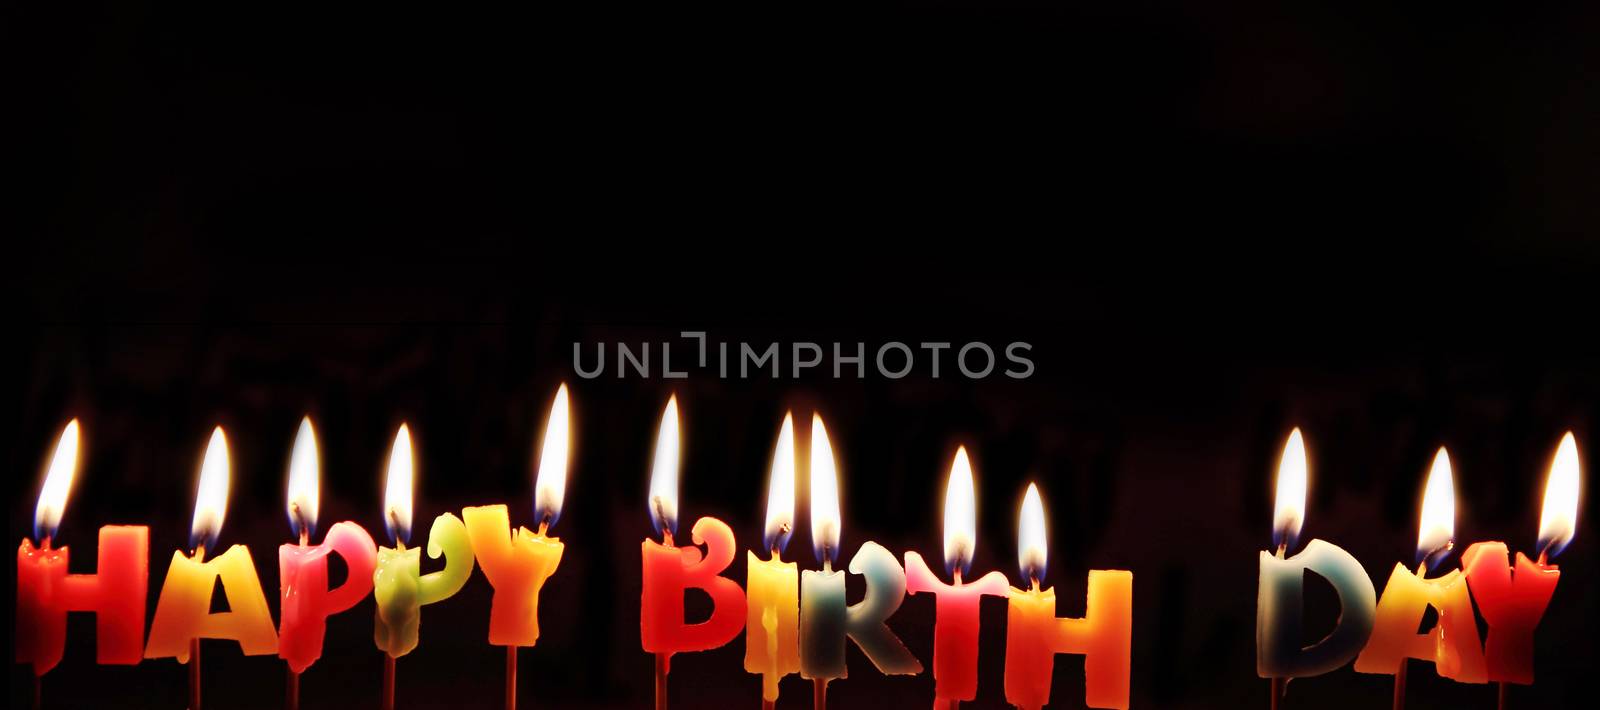 Happy birthday candles  by wyoosumran